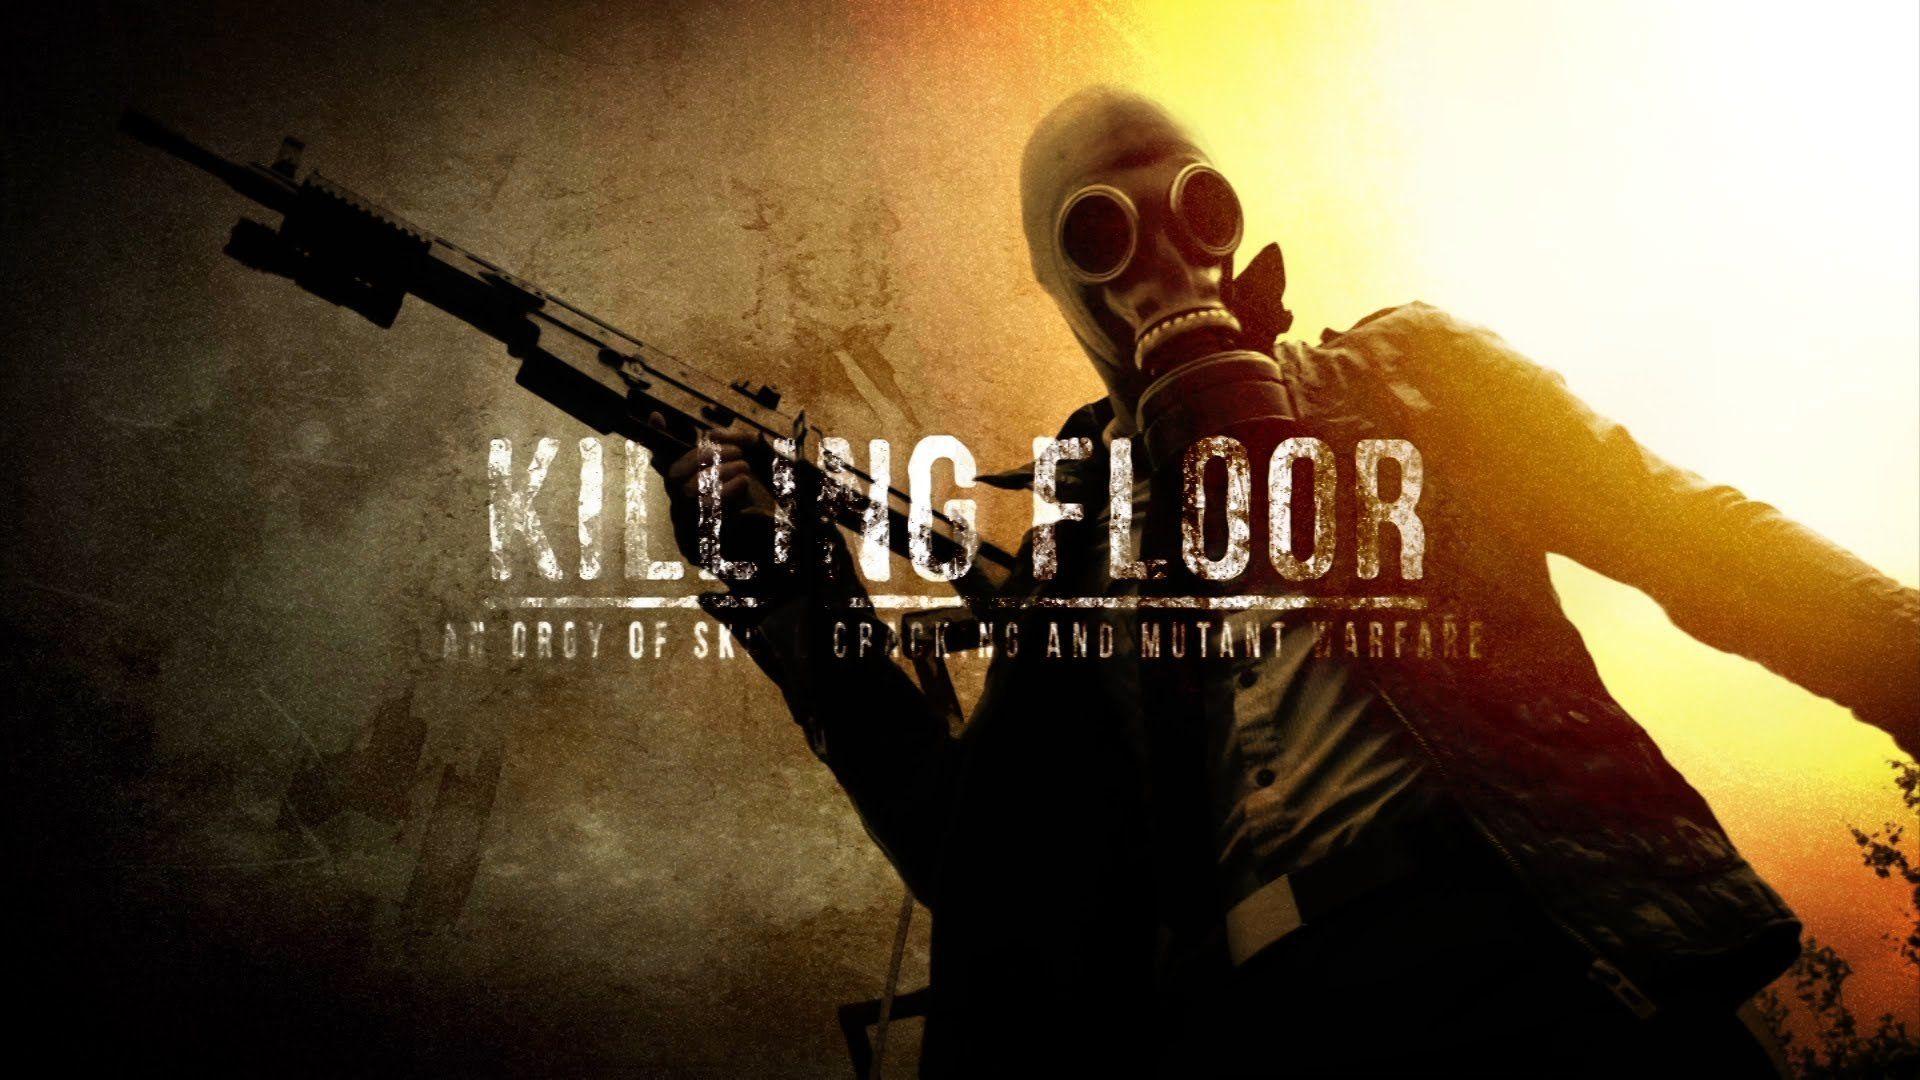 Killing Floor Wallpaper, 38 Desktop Image of Killing Floor